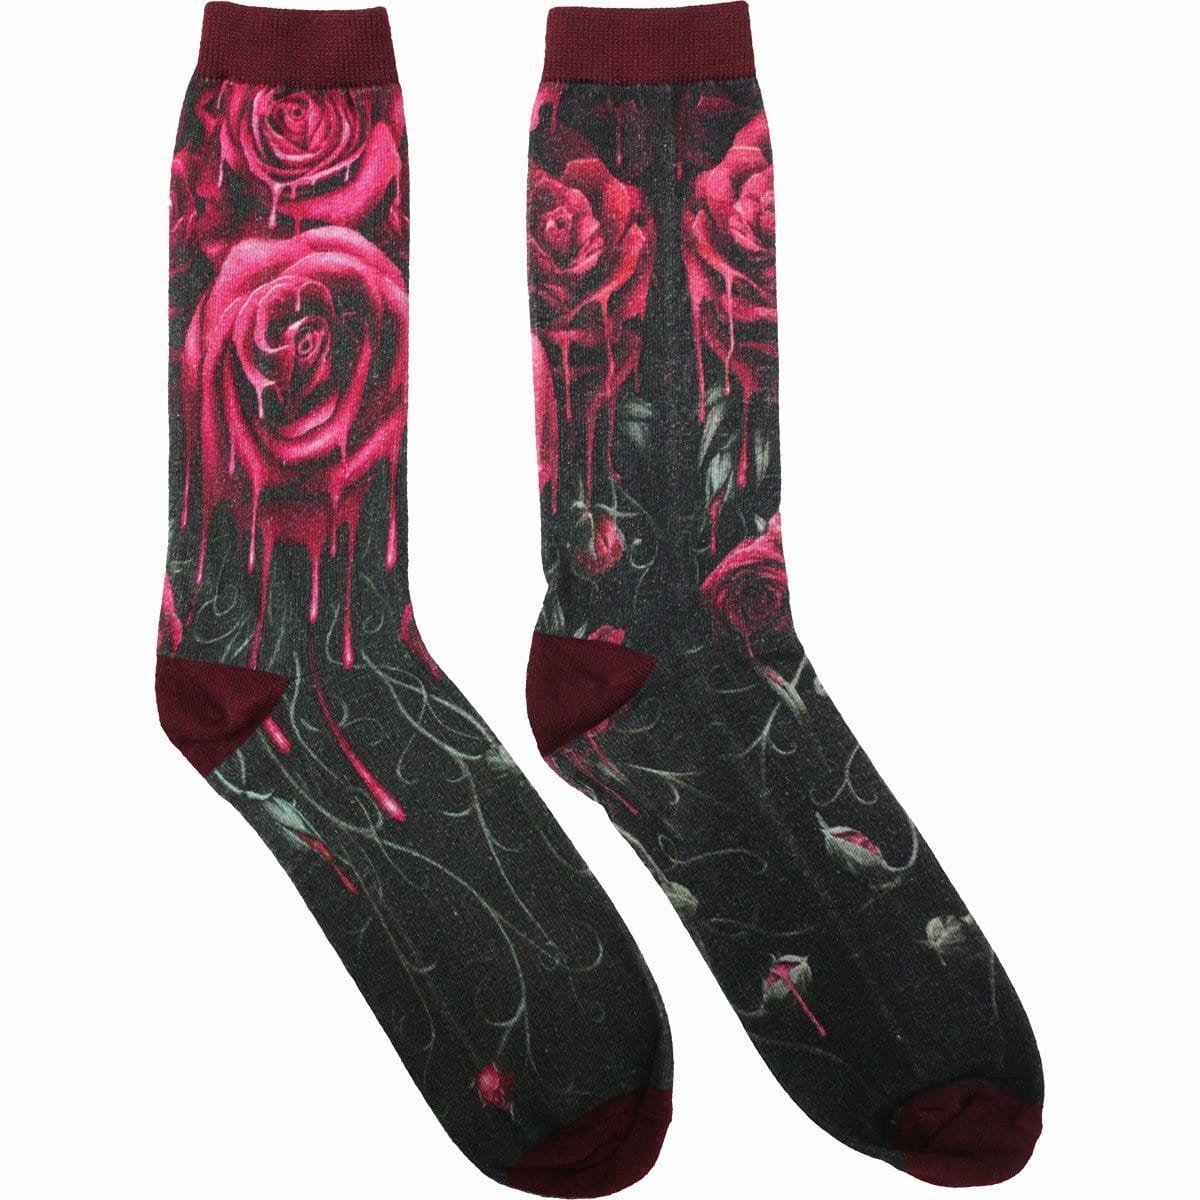 BLOOD ROSE - Unisex Printed Socks - Spiral USA